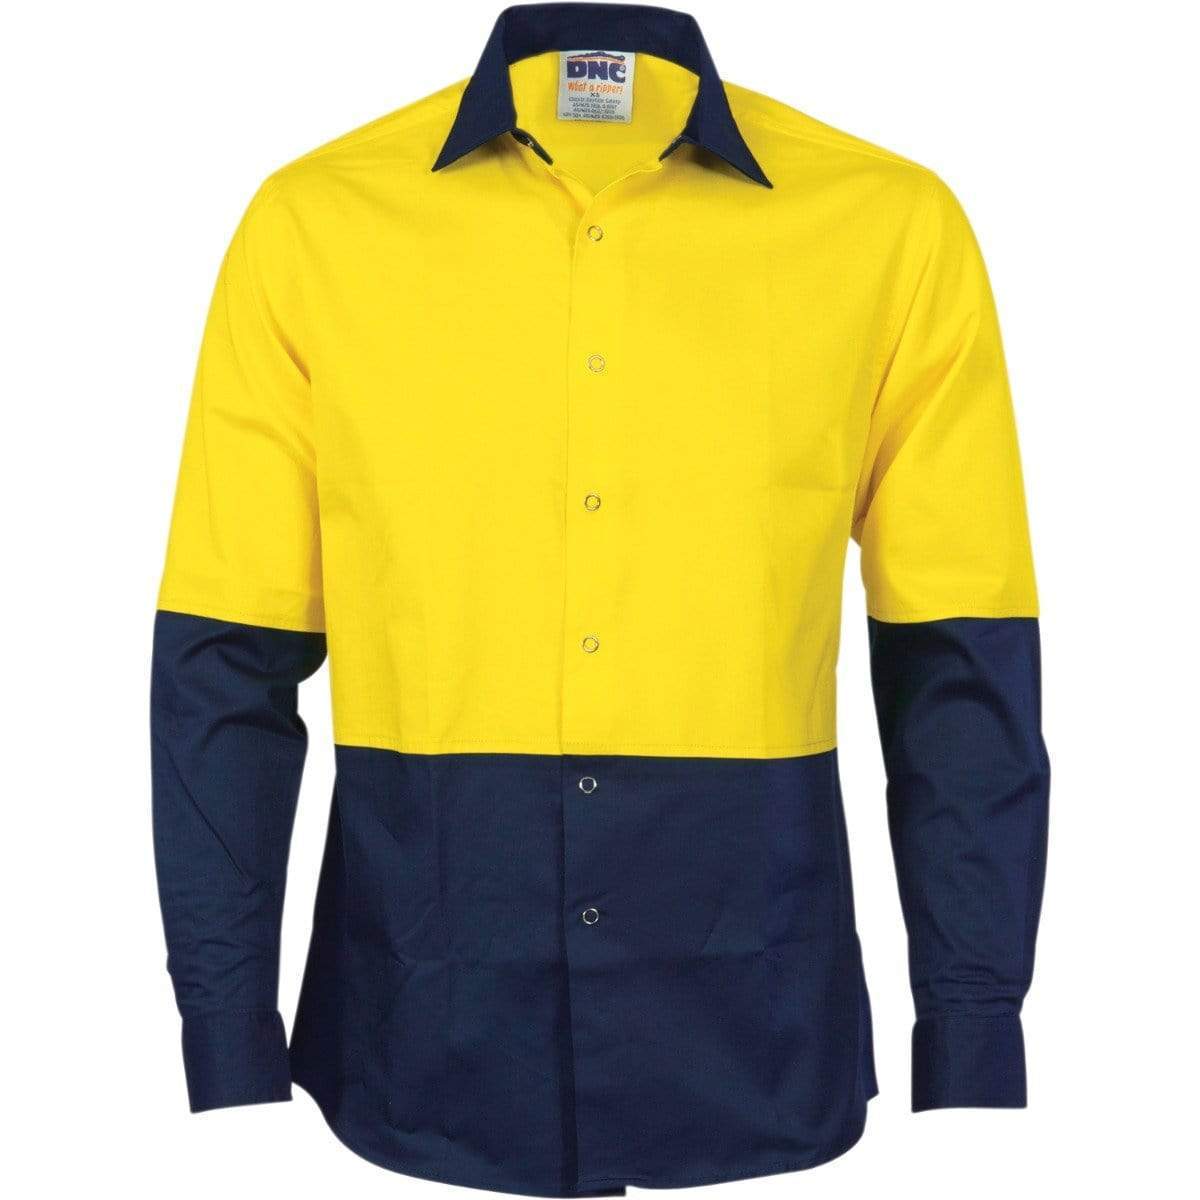 DNC Workwear Hospitality & Chefwear Yellow/Navy / XS DNC WORKWEAR Hi-Vis Cool Breeze Food Industry Long Sleeve Cotton Shirt 3942